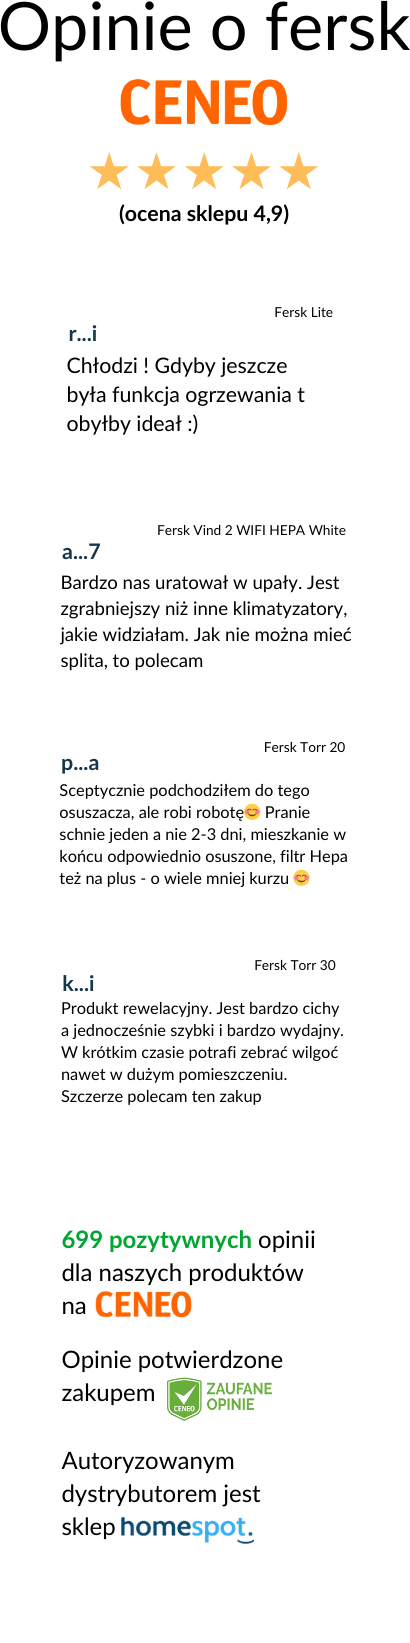 Opinie o fersk.pl